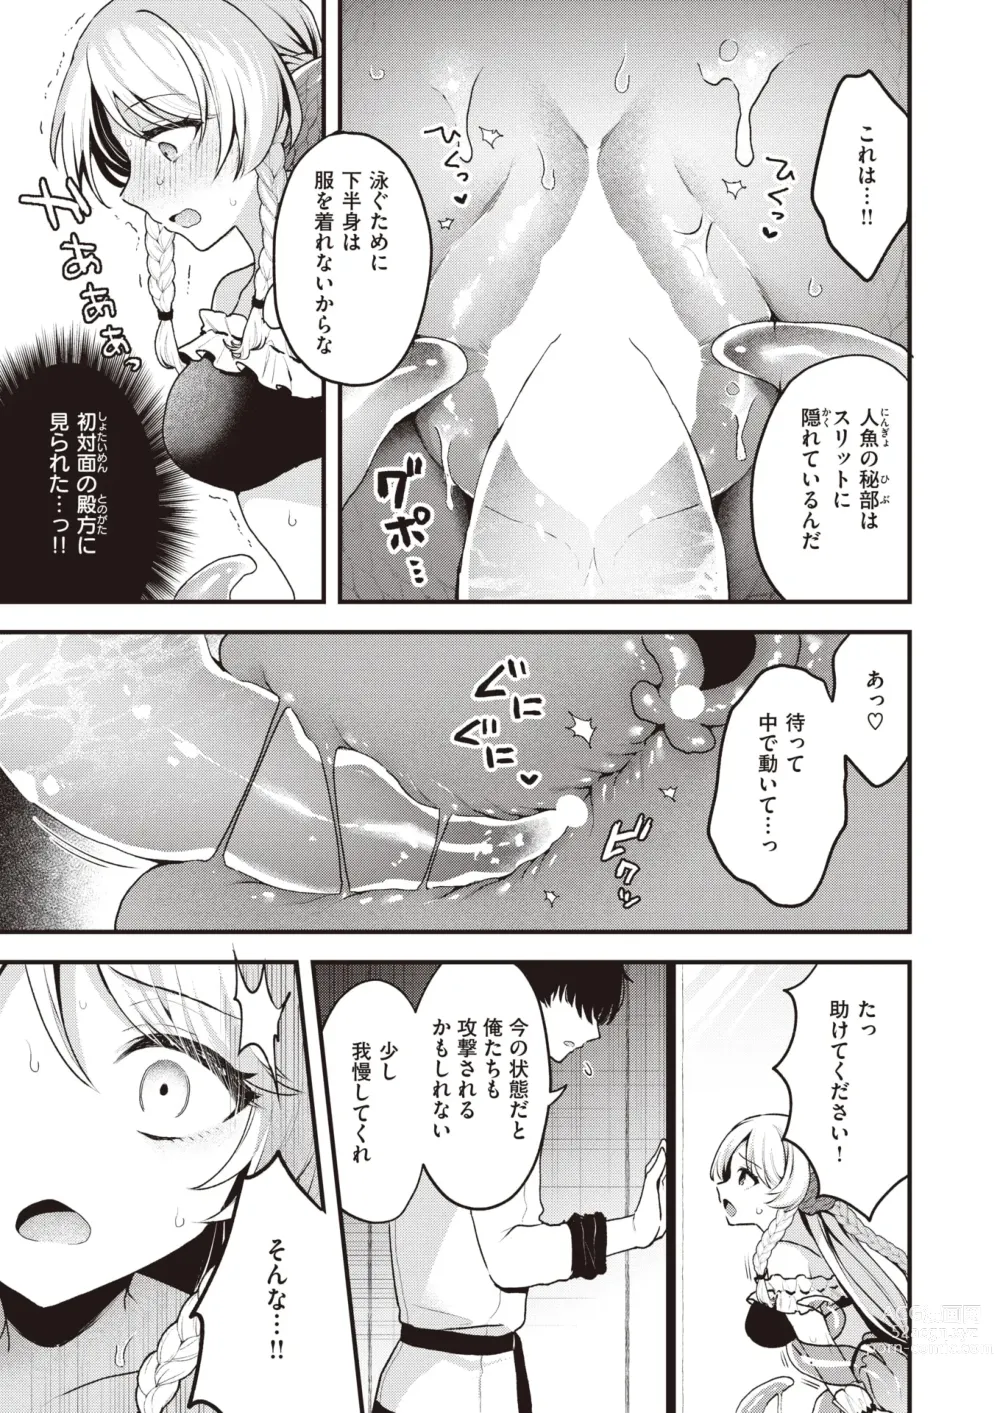 Page 10 of manga Isekai Rakuten Vol. 31